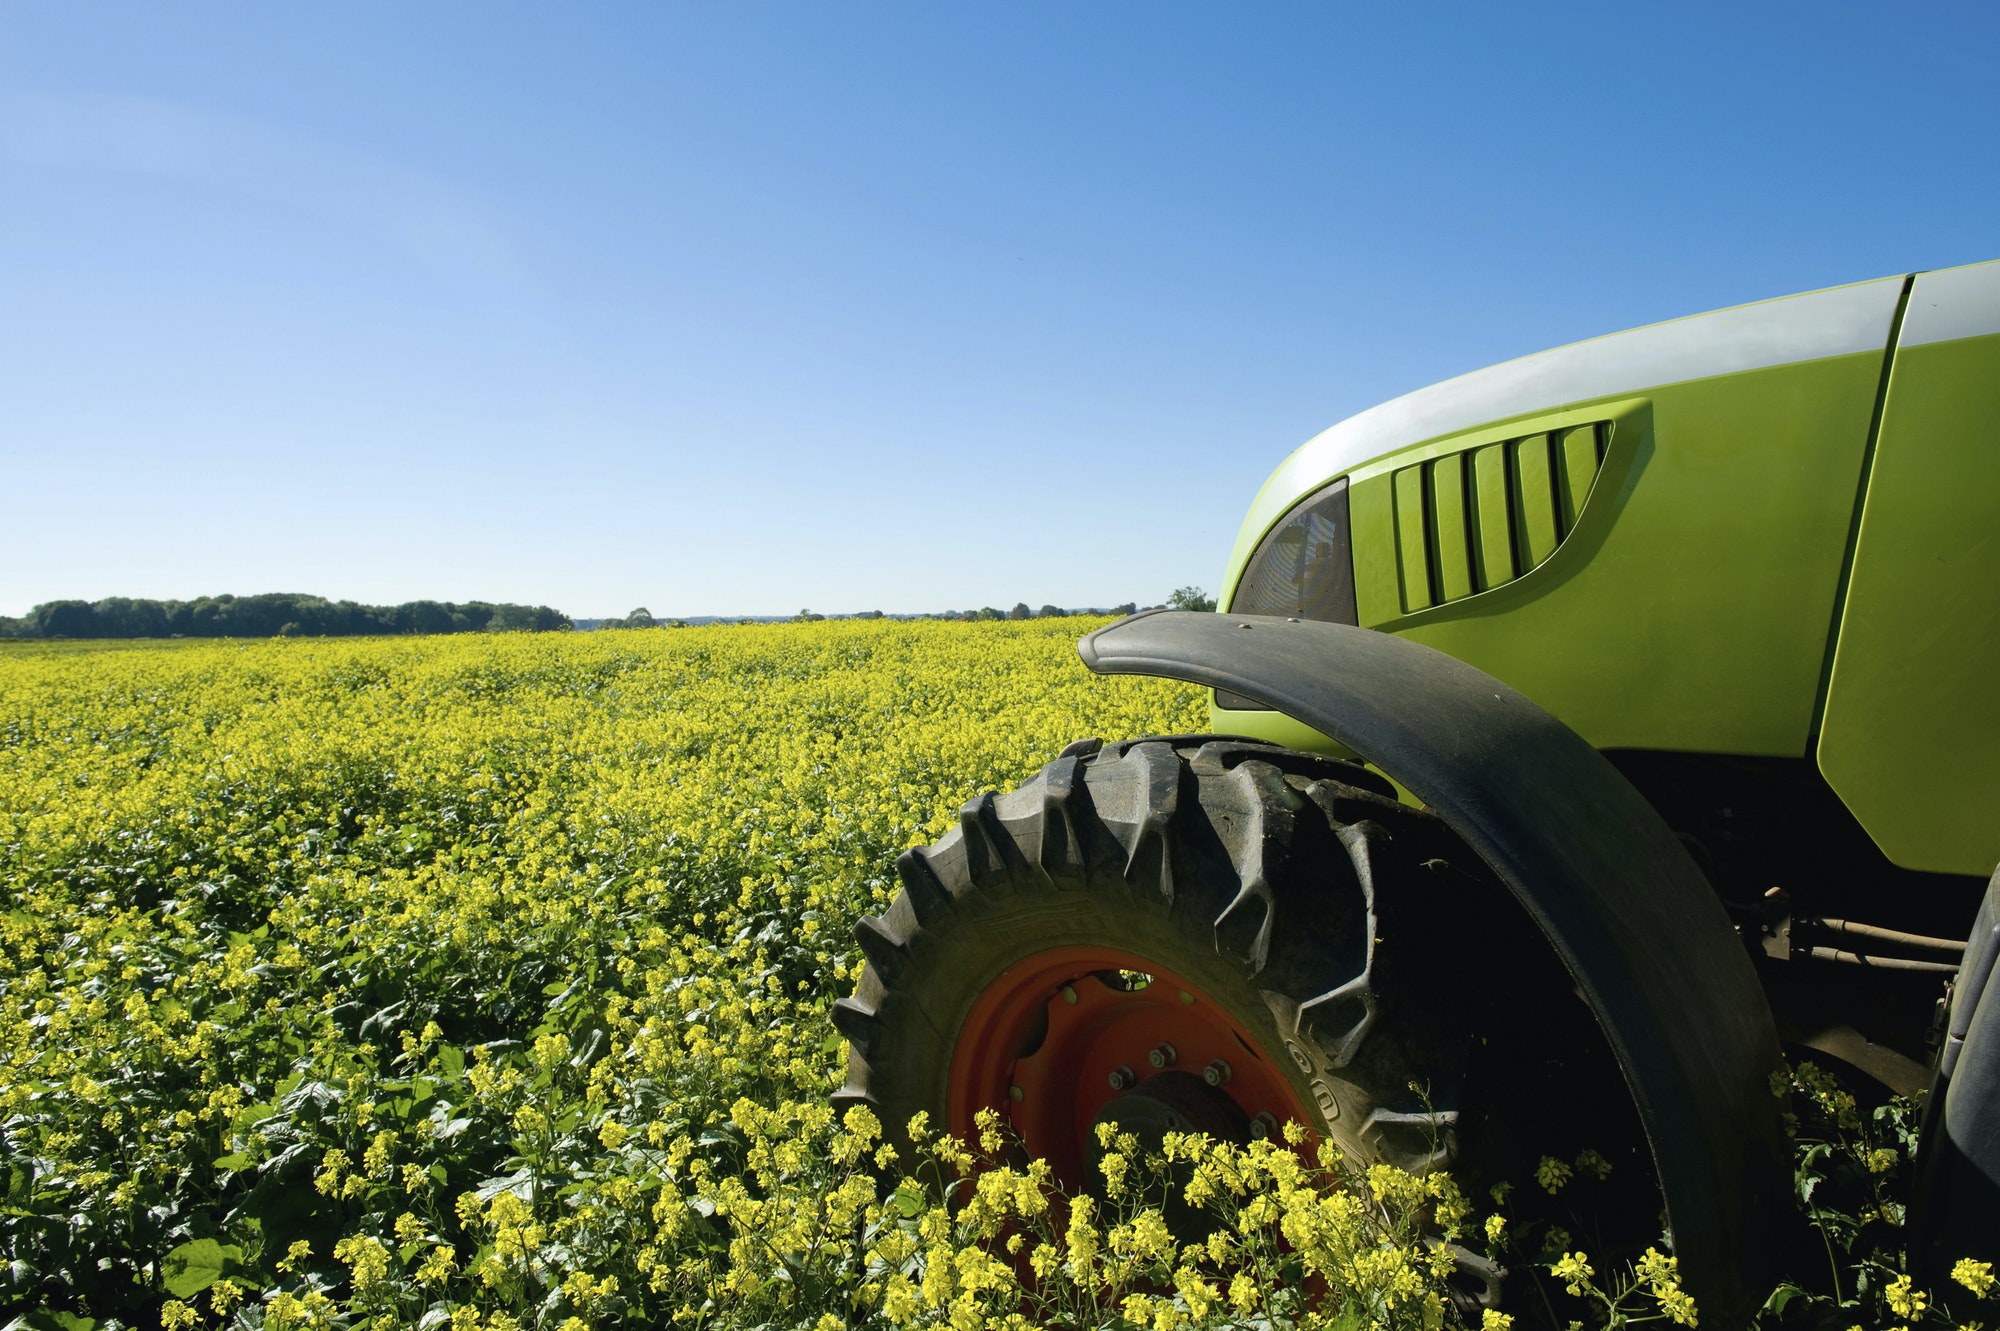 A tractor in a field of crops in an open landscape.